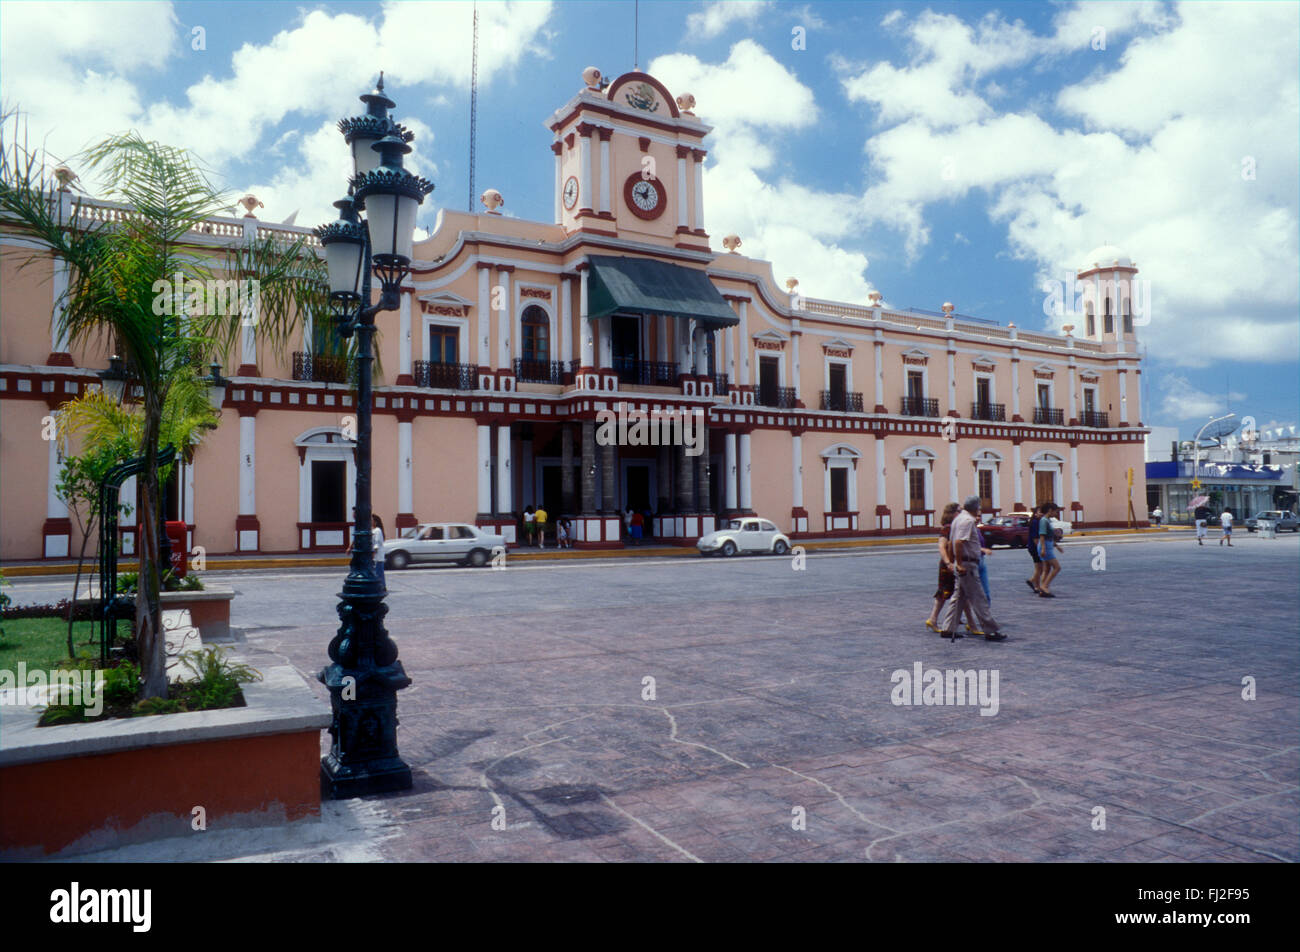 The Palacio de Gobierno or government palace in Tepic, Nayarit, Mexico Stock Photo